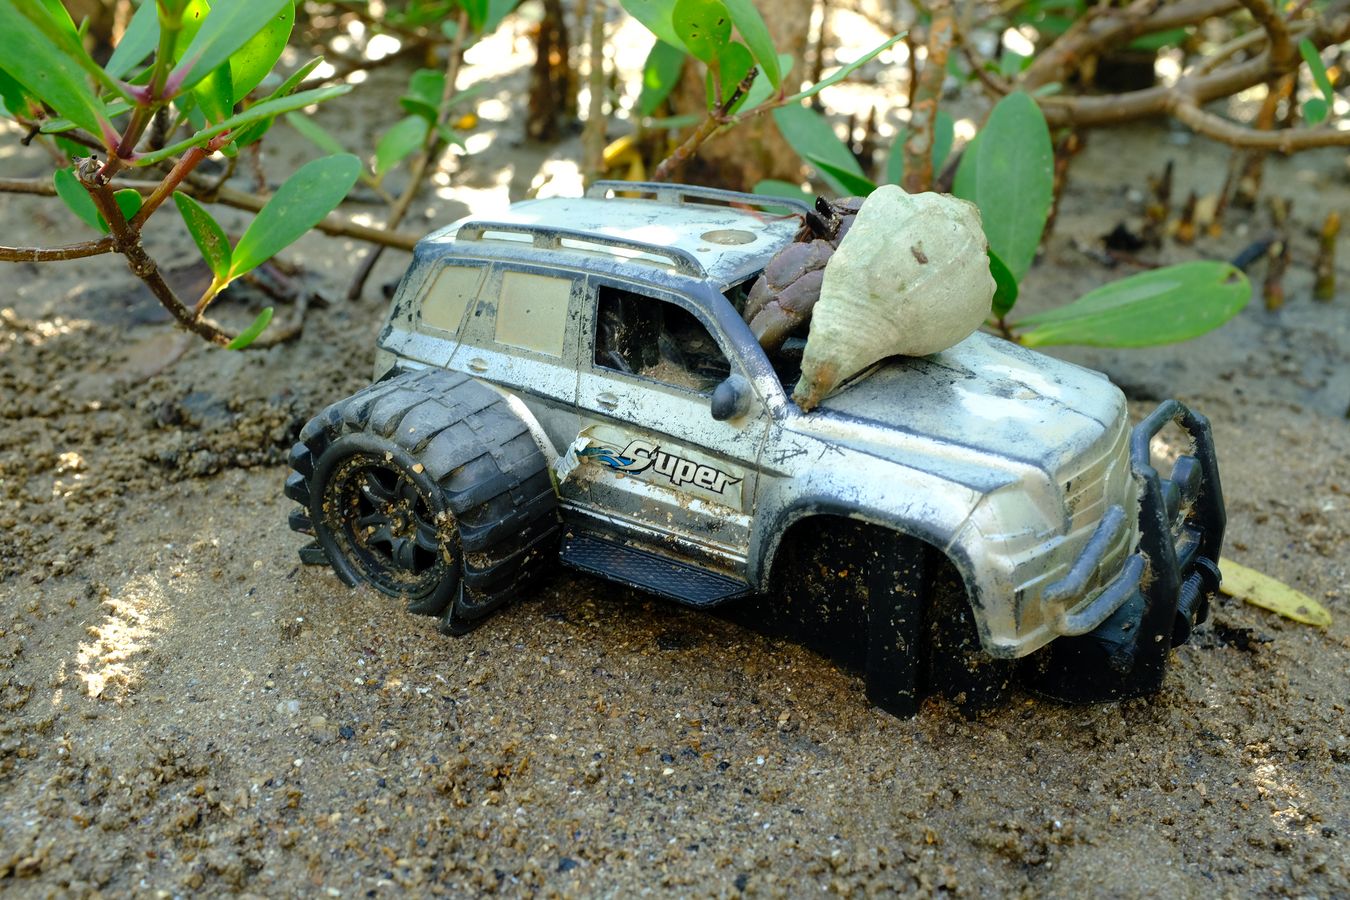 Viola Land Hermit Crab in a Toy Plastic Car in the Mangrove { Coenobita Violascens } 